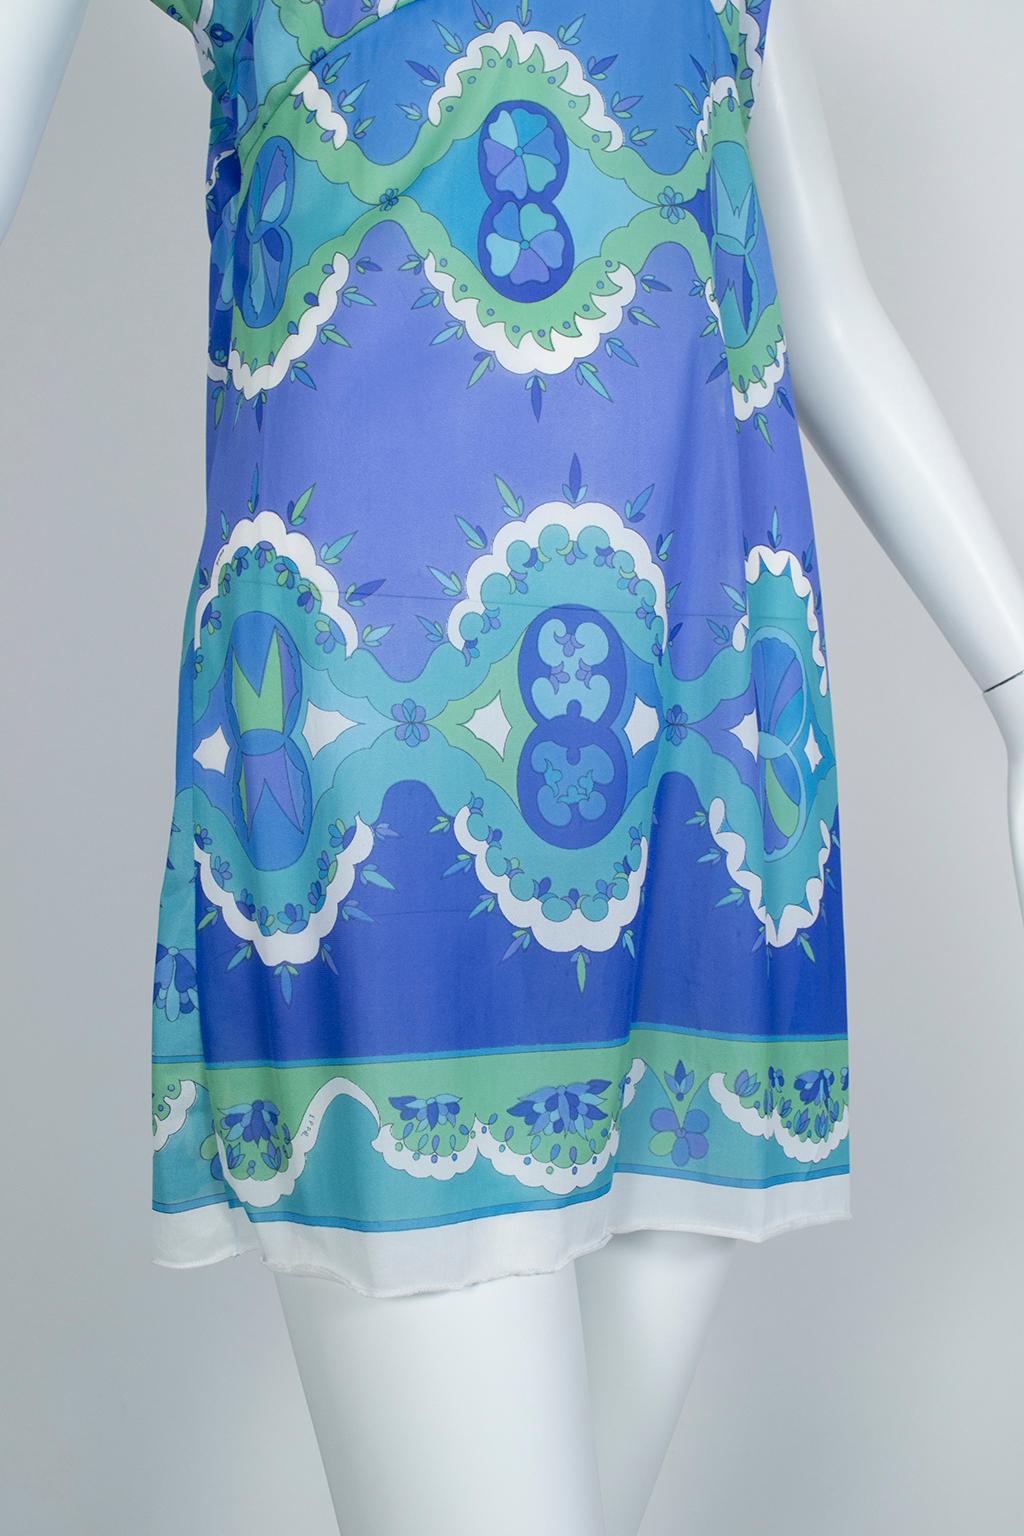 Emilio Pucci Formfit Rogers Blue Palette Negligée Slip Mini Dress - Small, 1960s 5